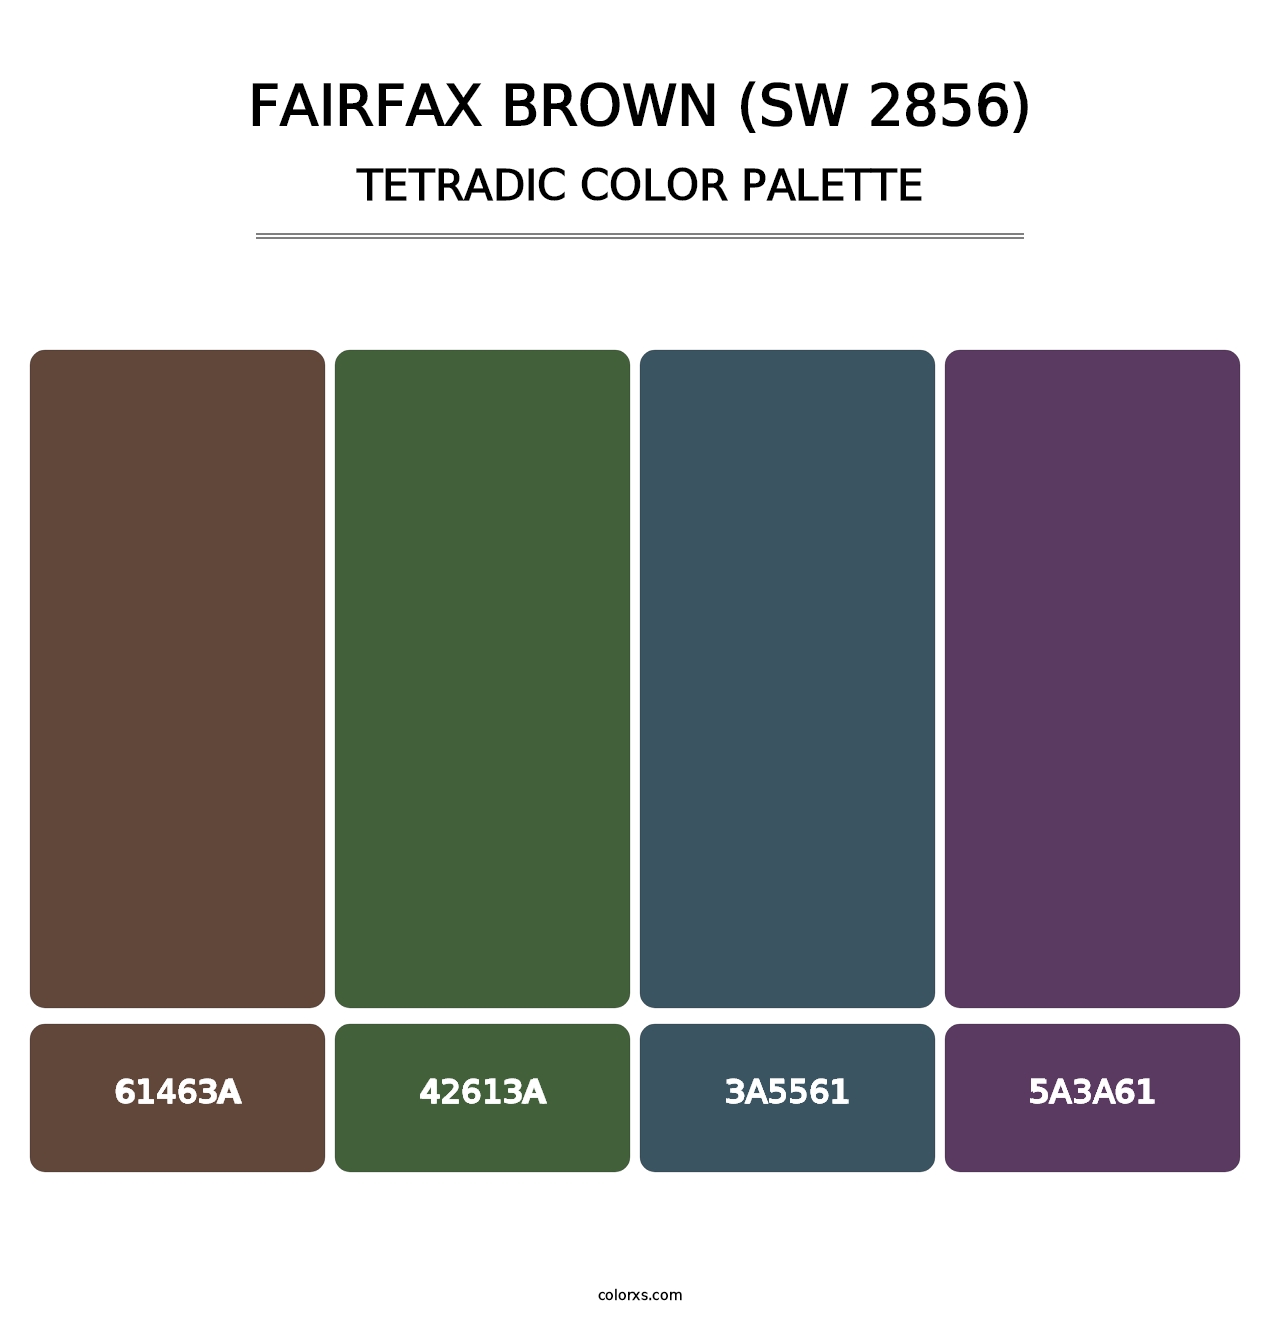 Fairfax Brown (SW 2856) - Tetradic Color Palette